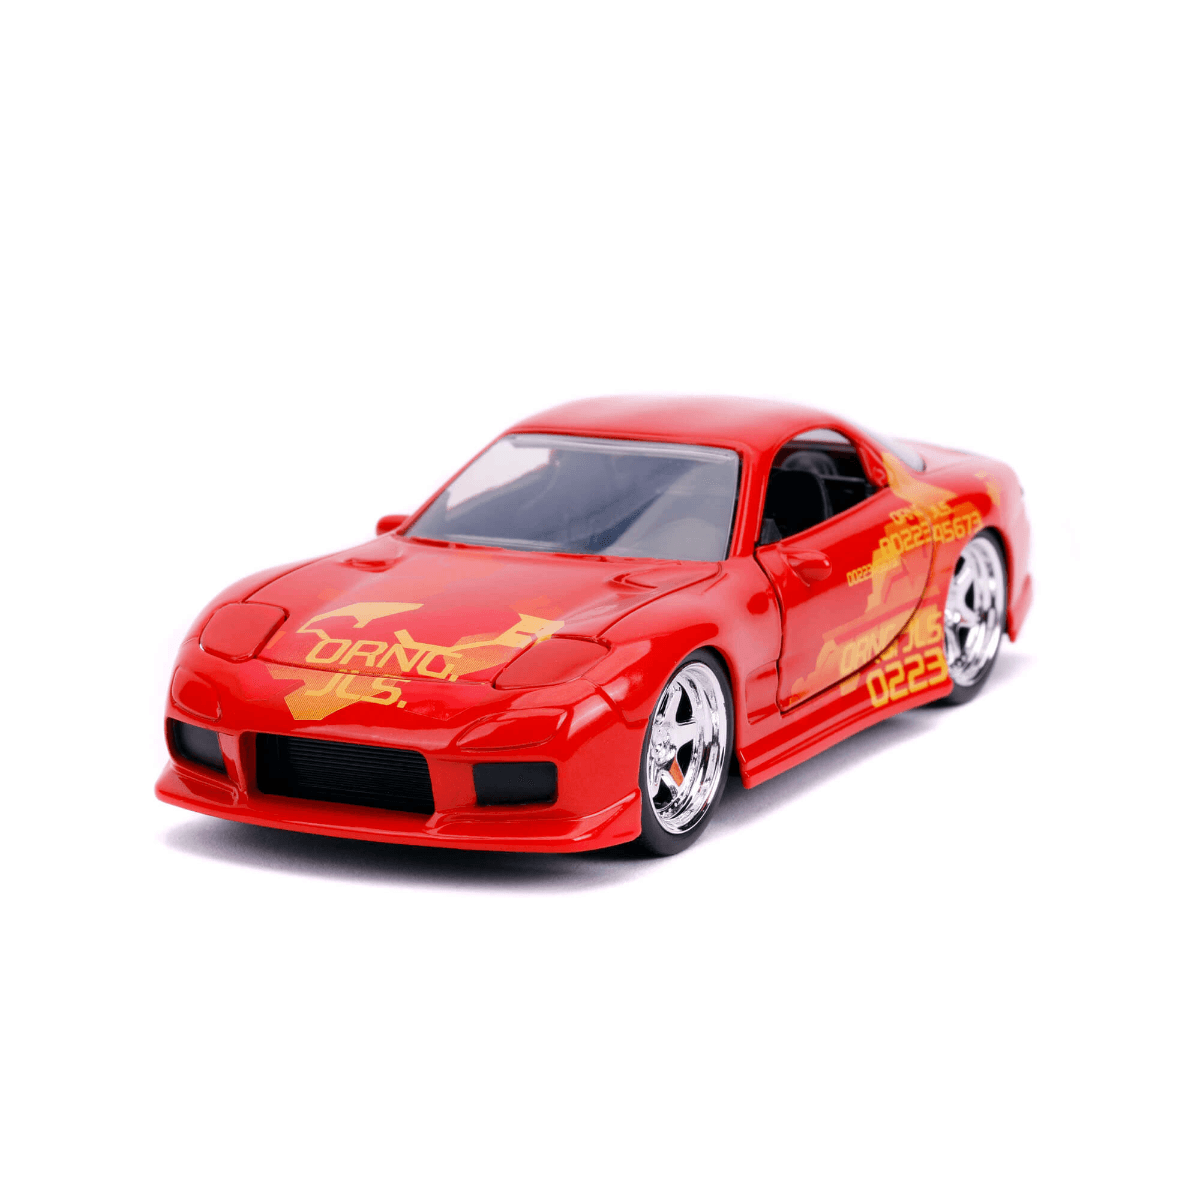 JAD31442 Fast and Furious - 1993 Mazda RX-7 1:32 Scale Hollywood Ride - Jada Toys - Titan Pop Culture